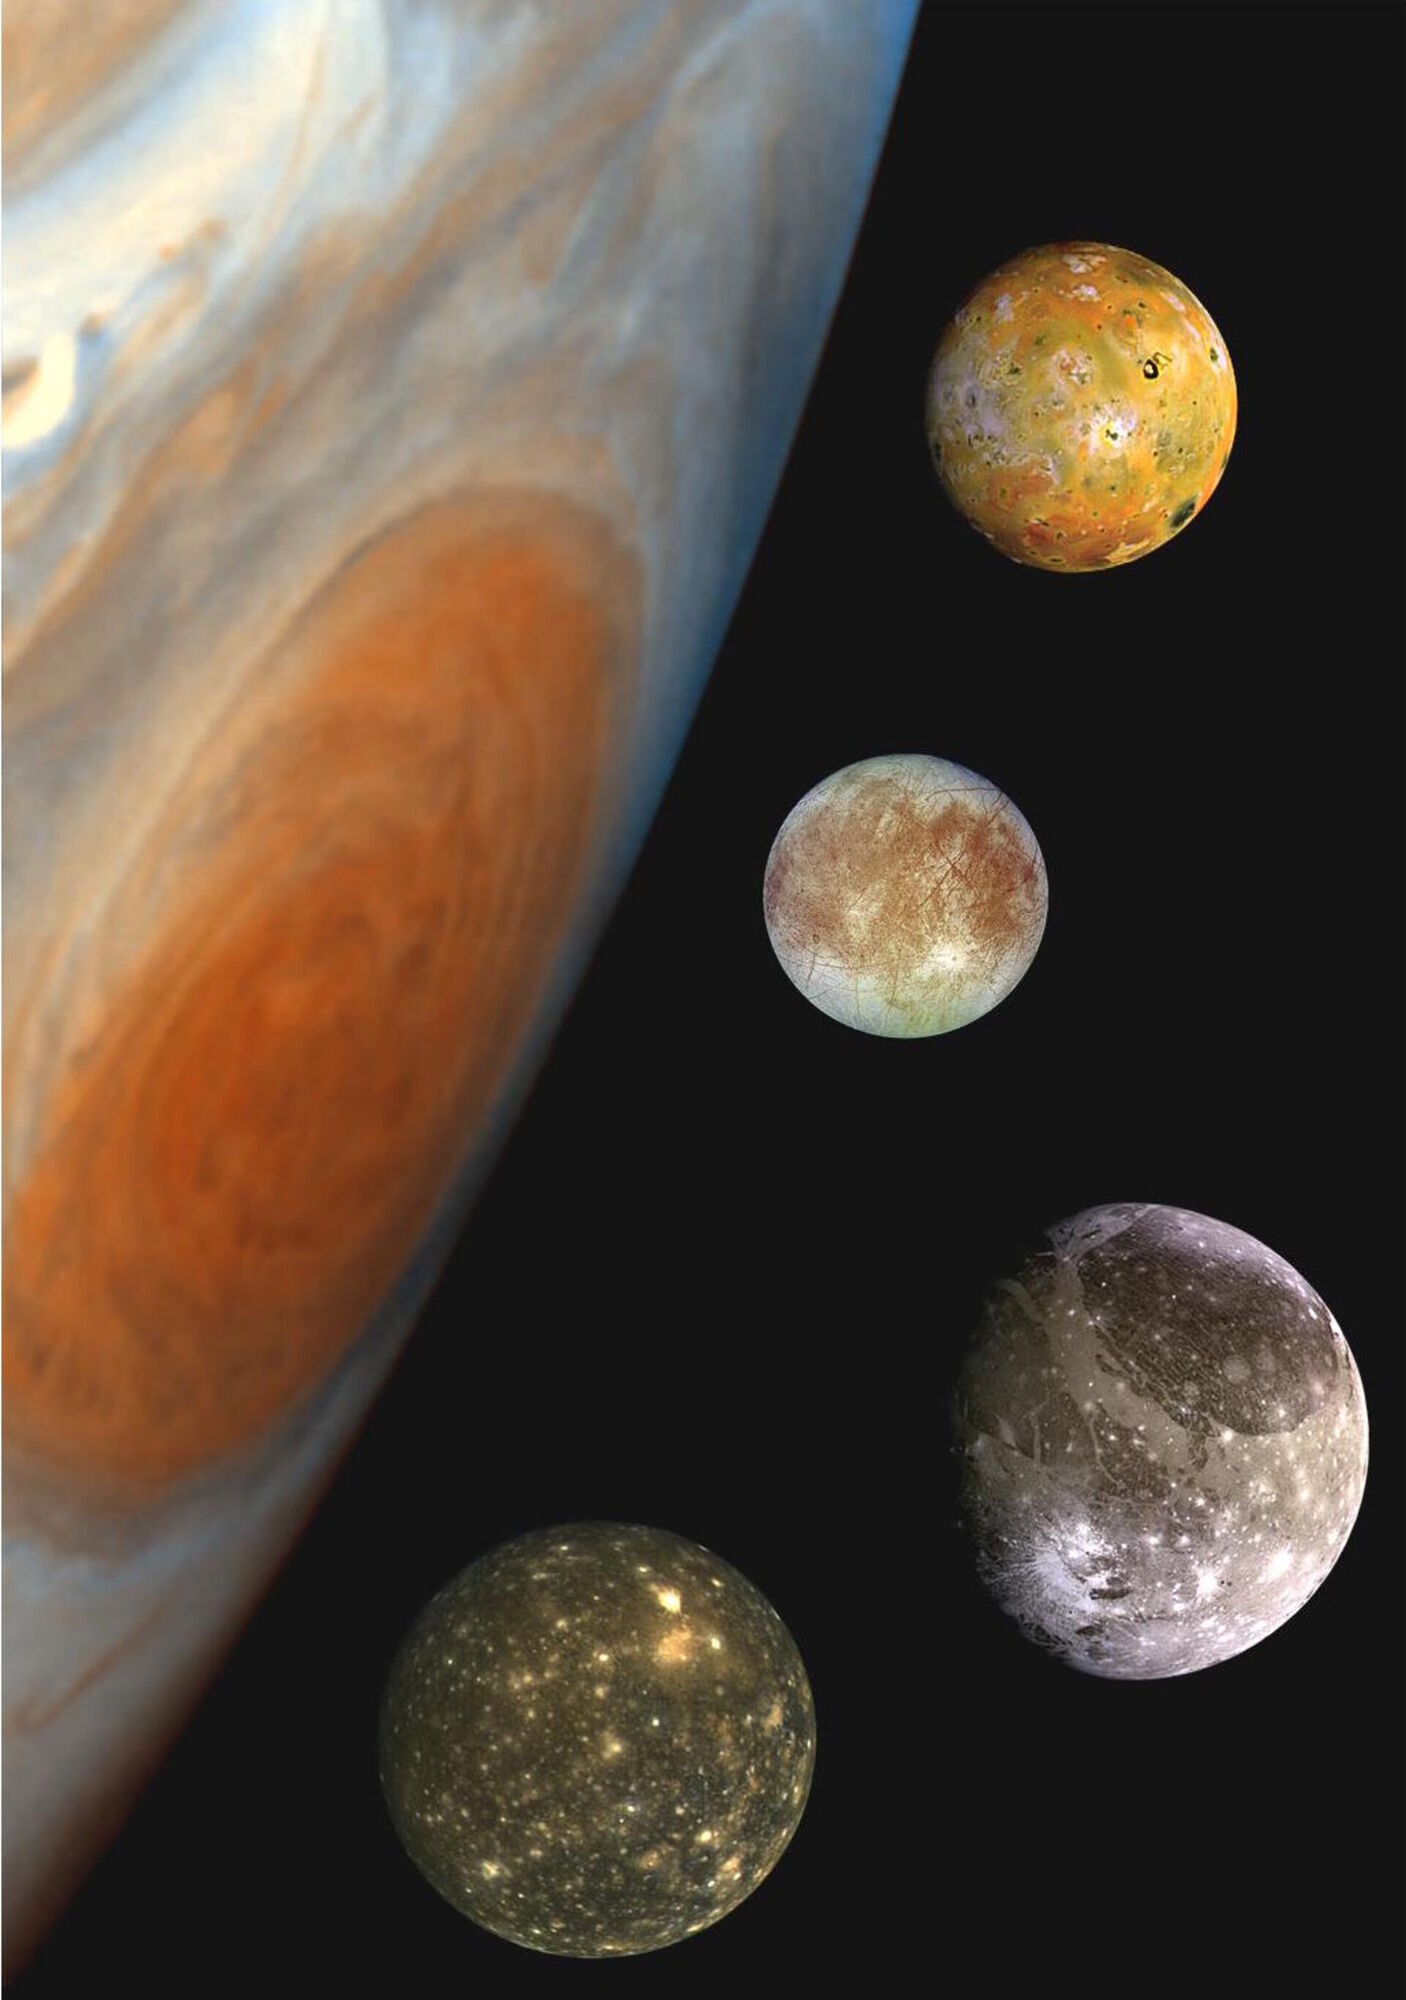 Jupiter and its moons - Io, Europa, Ganymede and Callisto